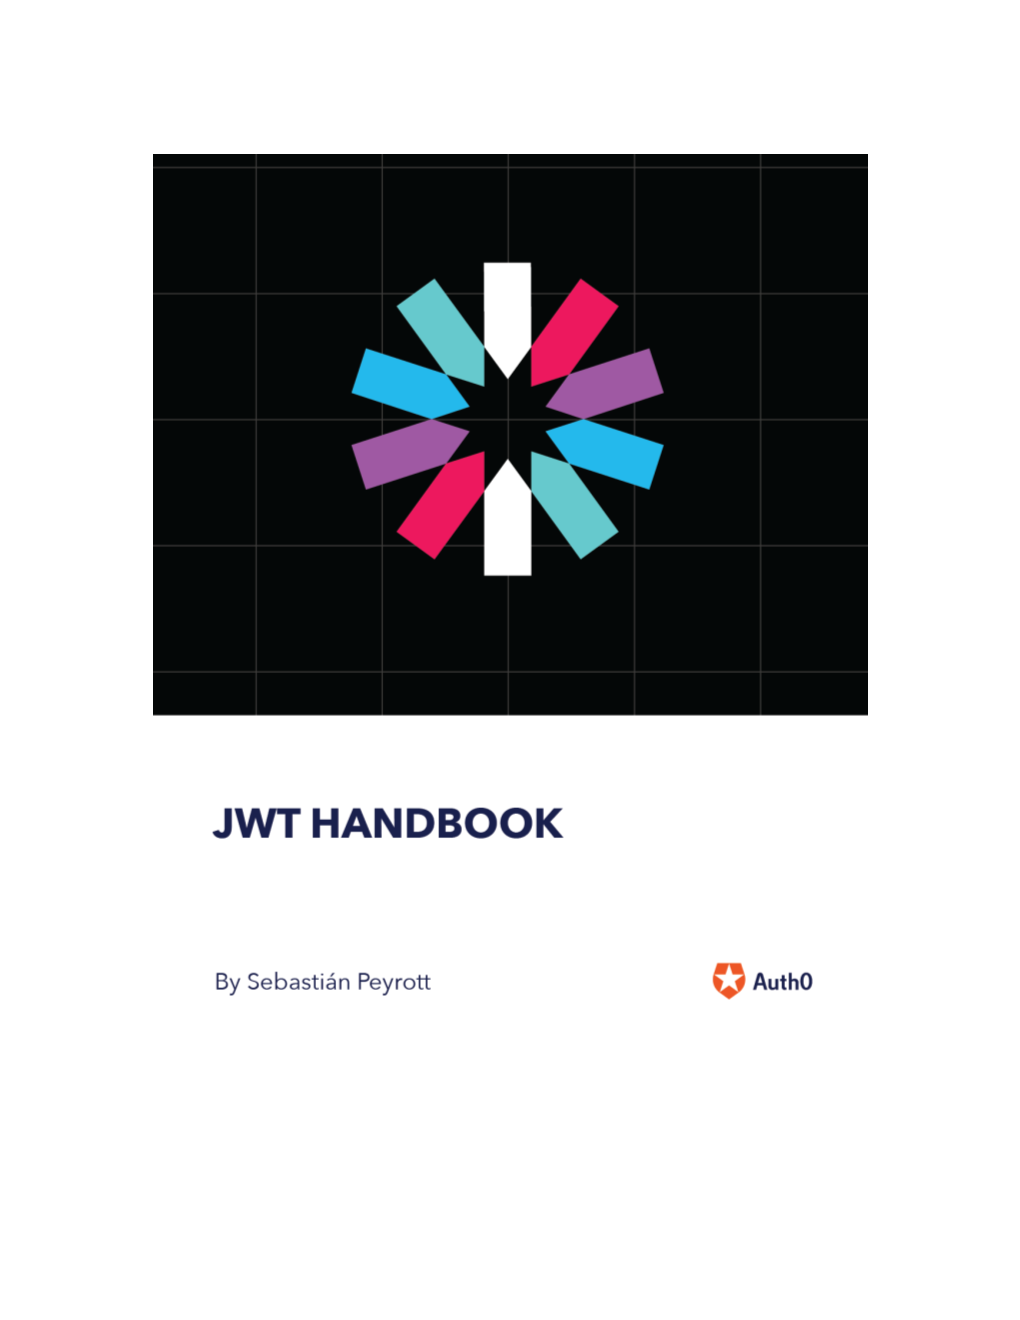 The JWT Handbook